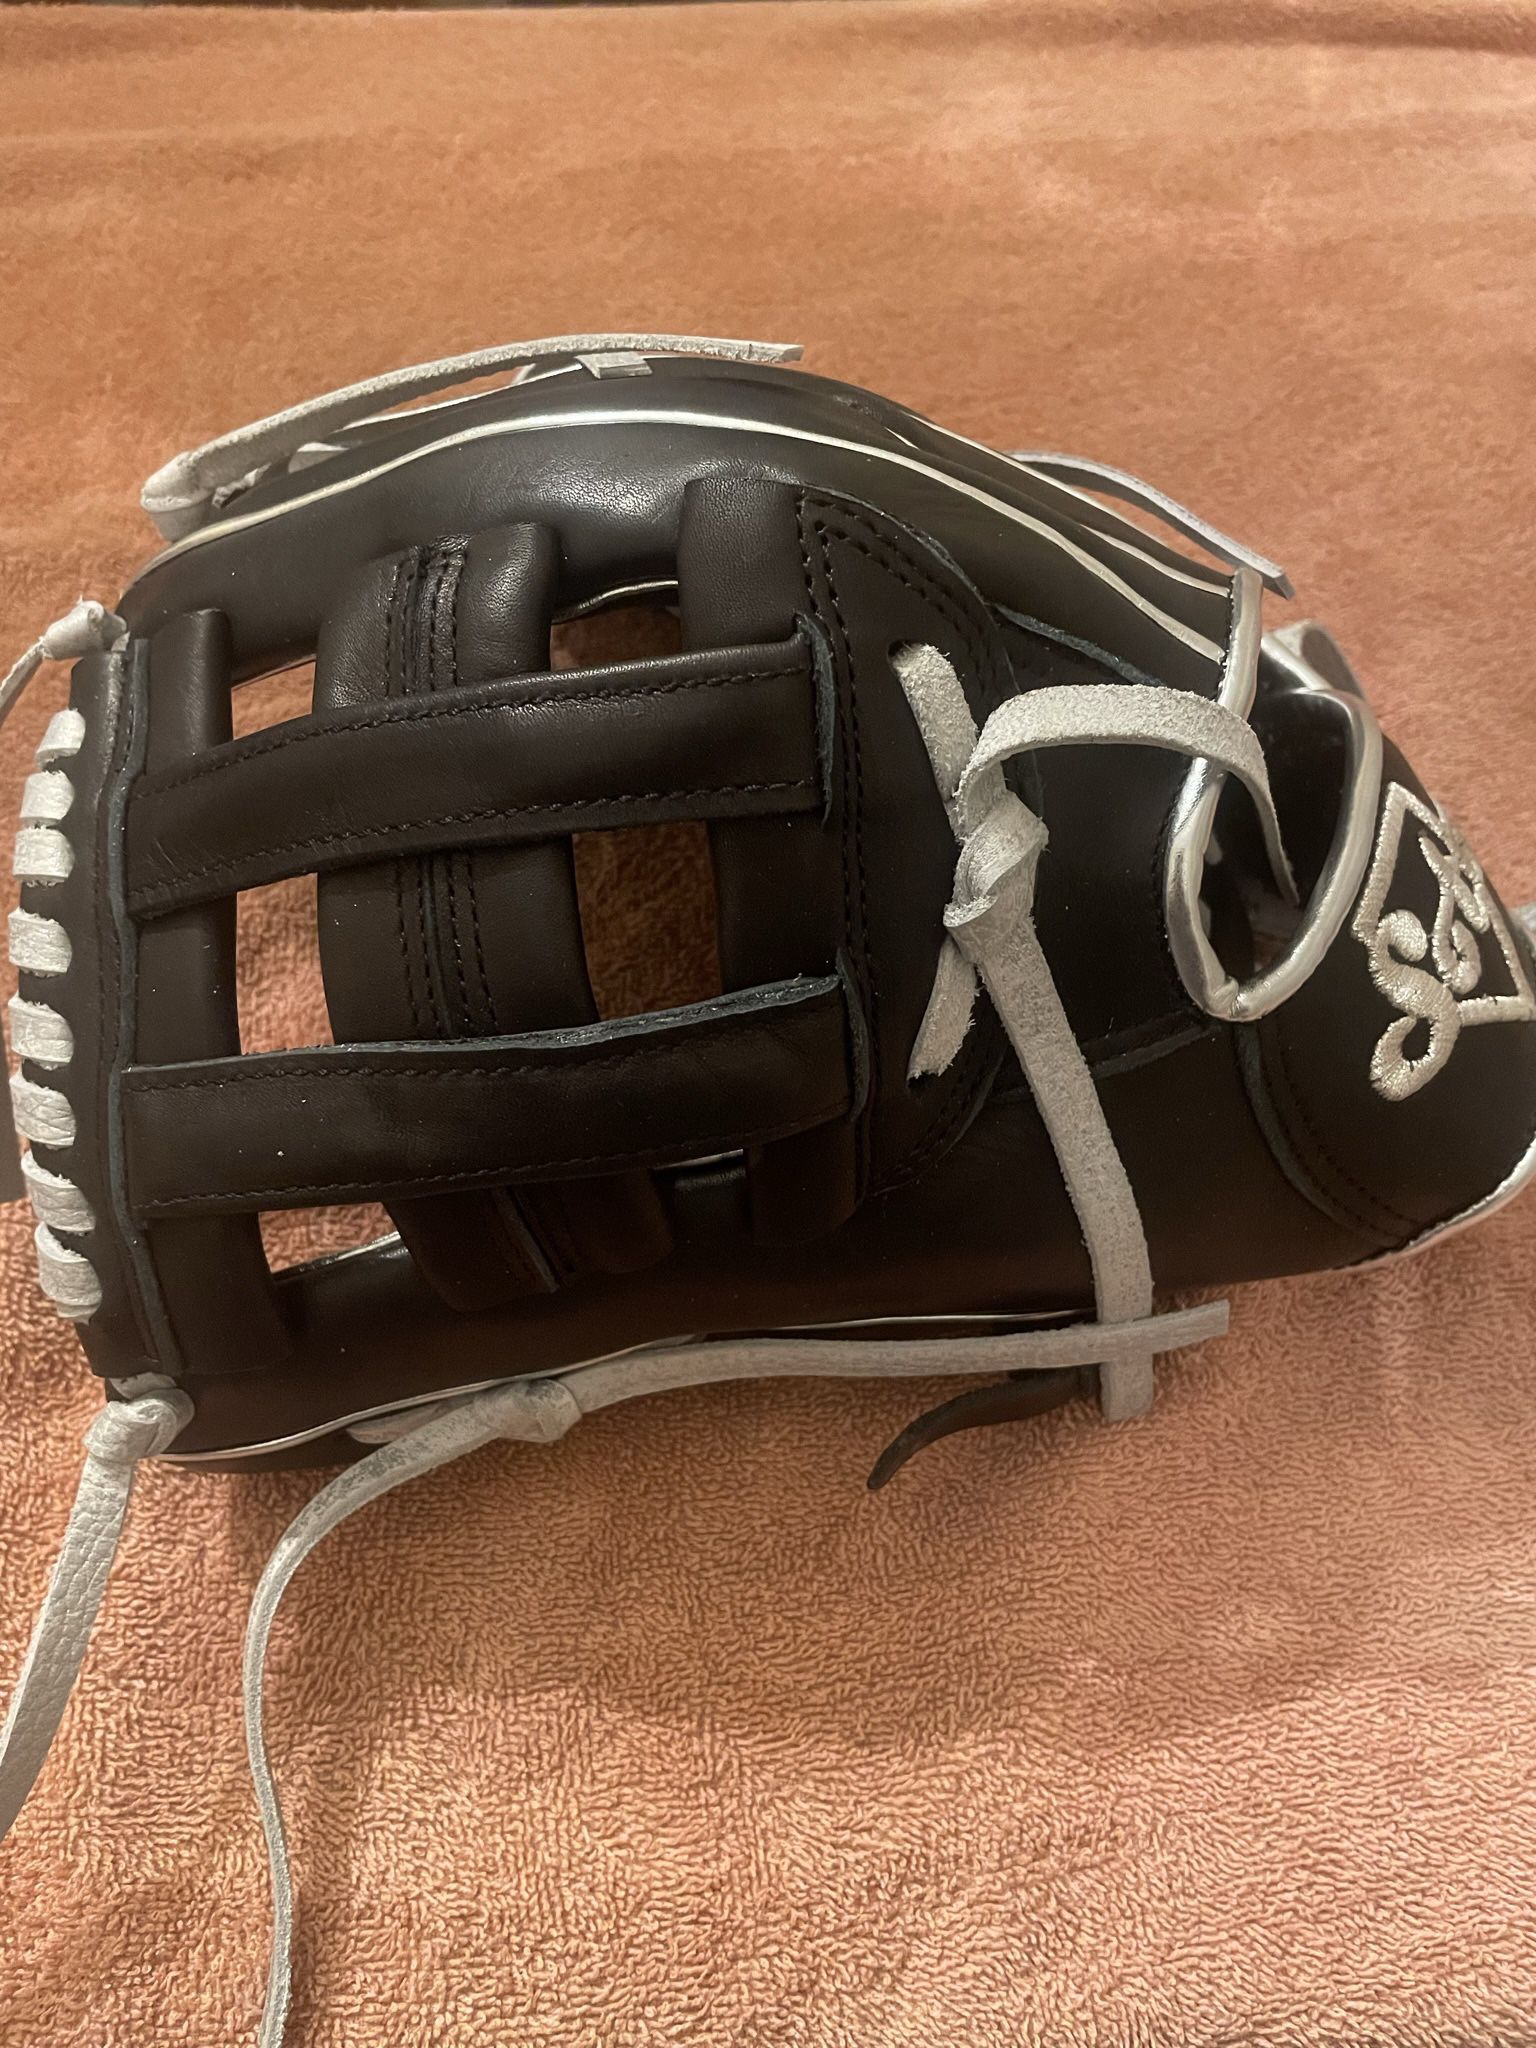 Lefty Baseball Glove